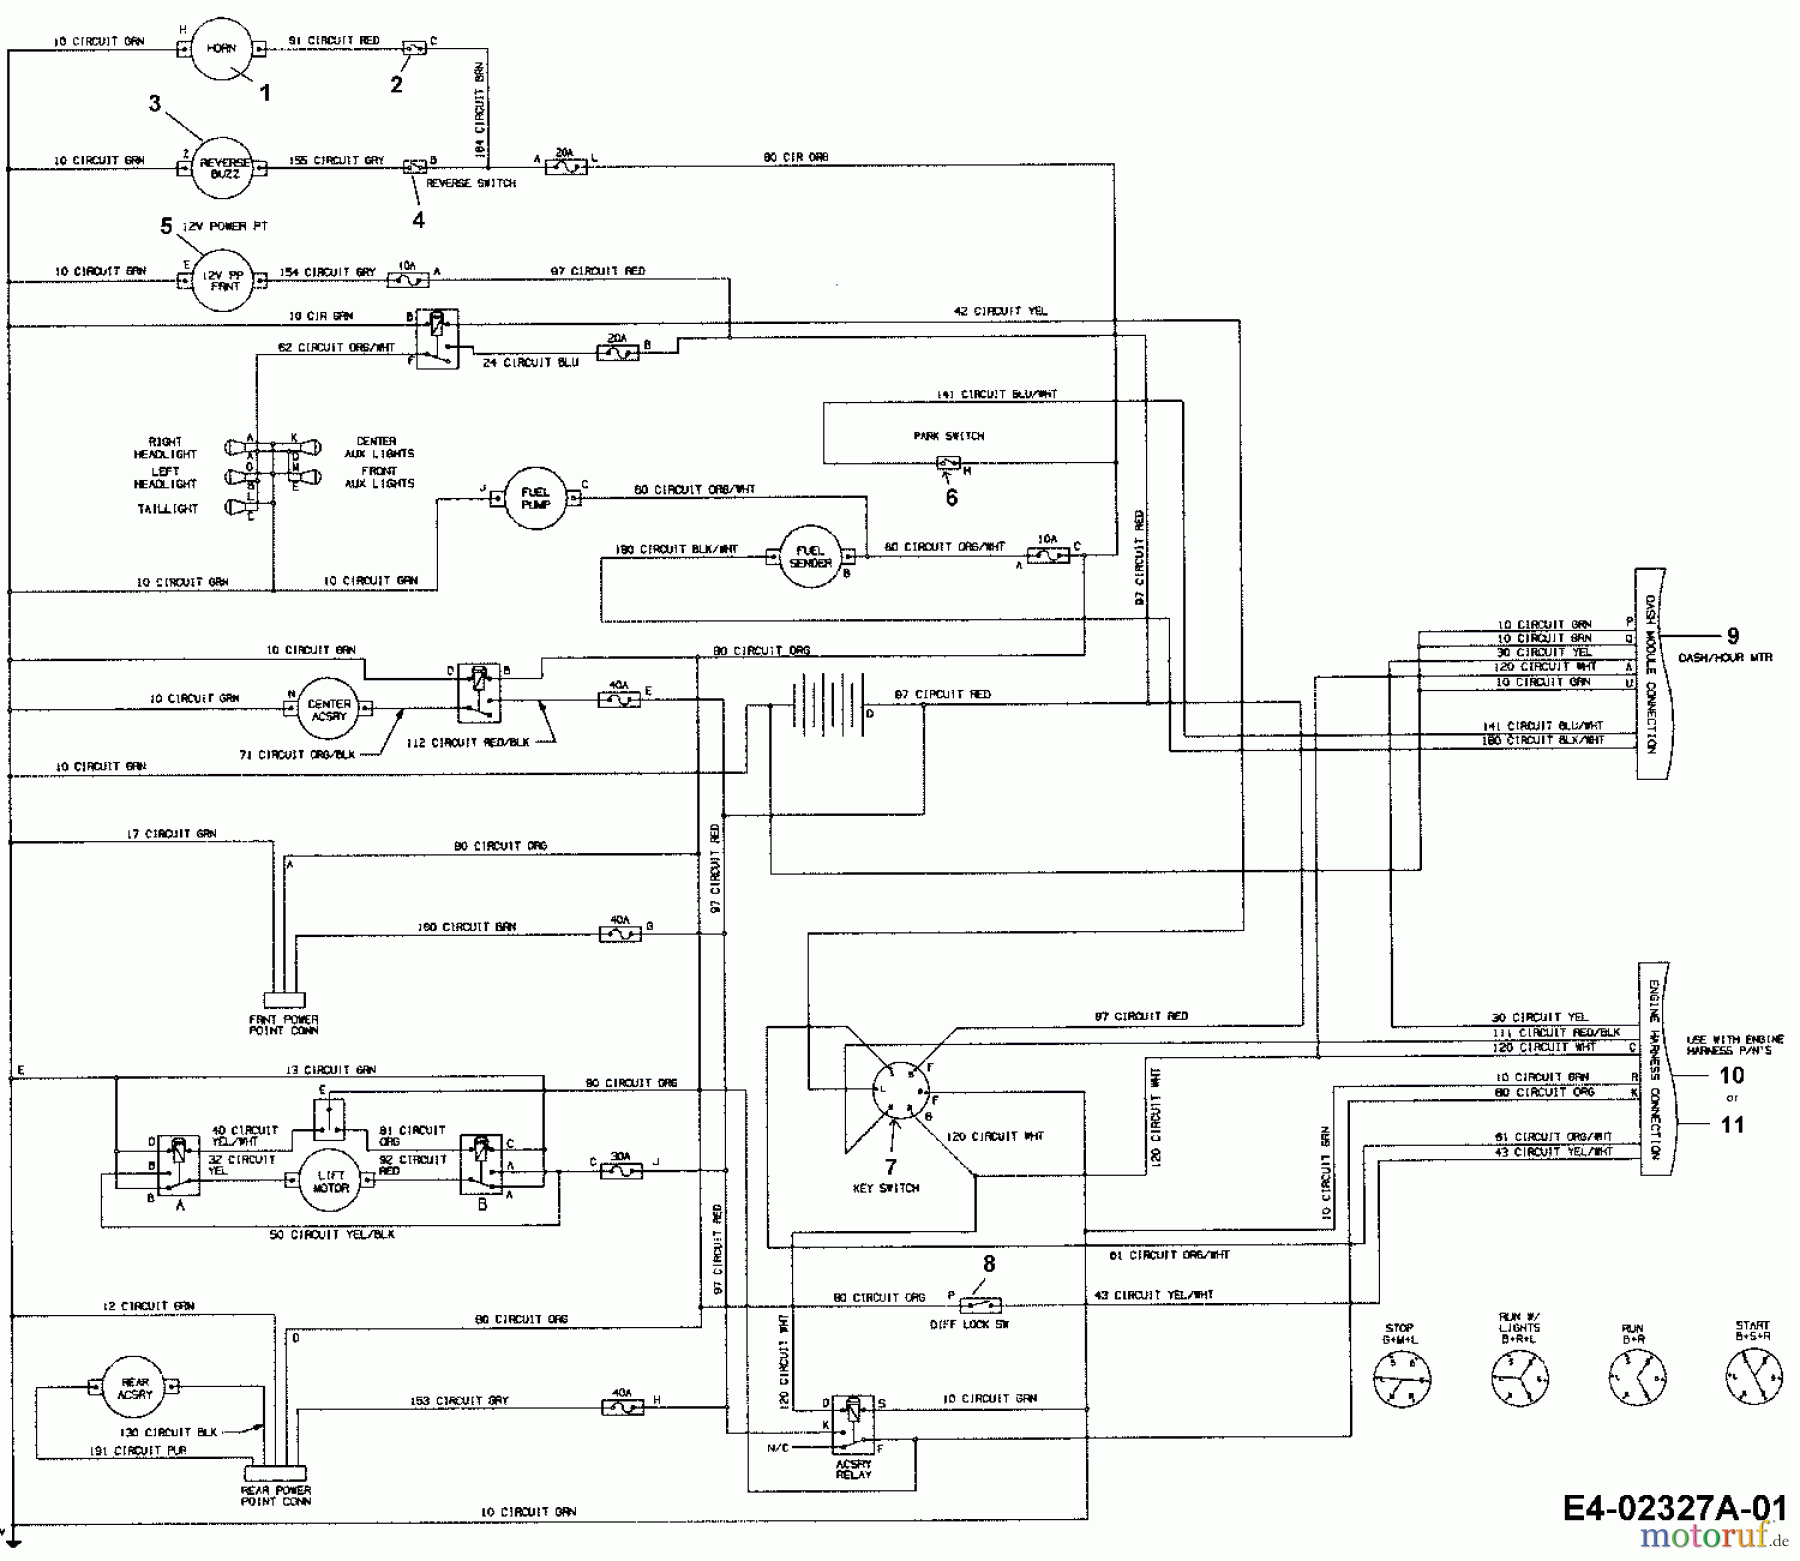 wiring diagram for a cub cadet rzt 50